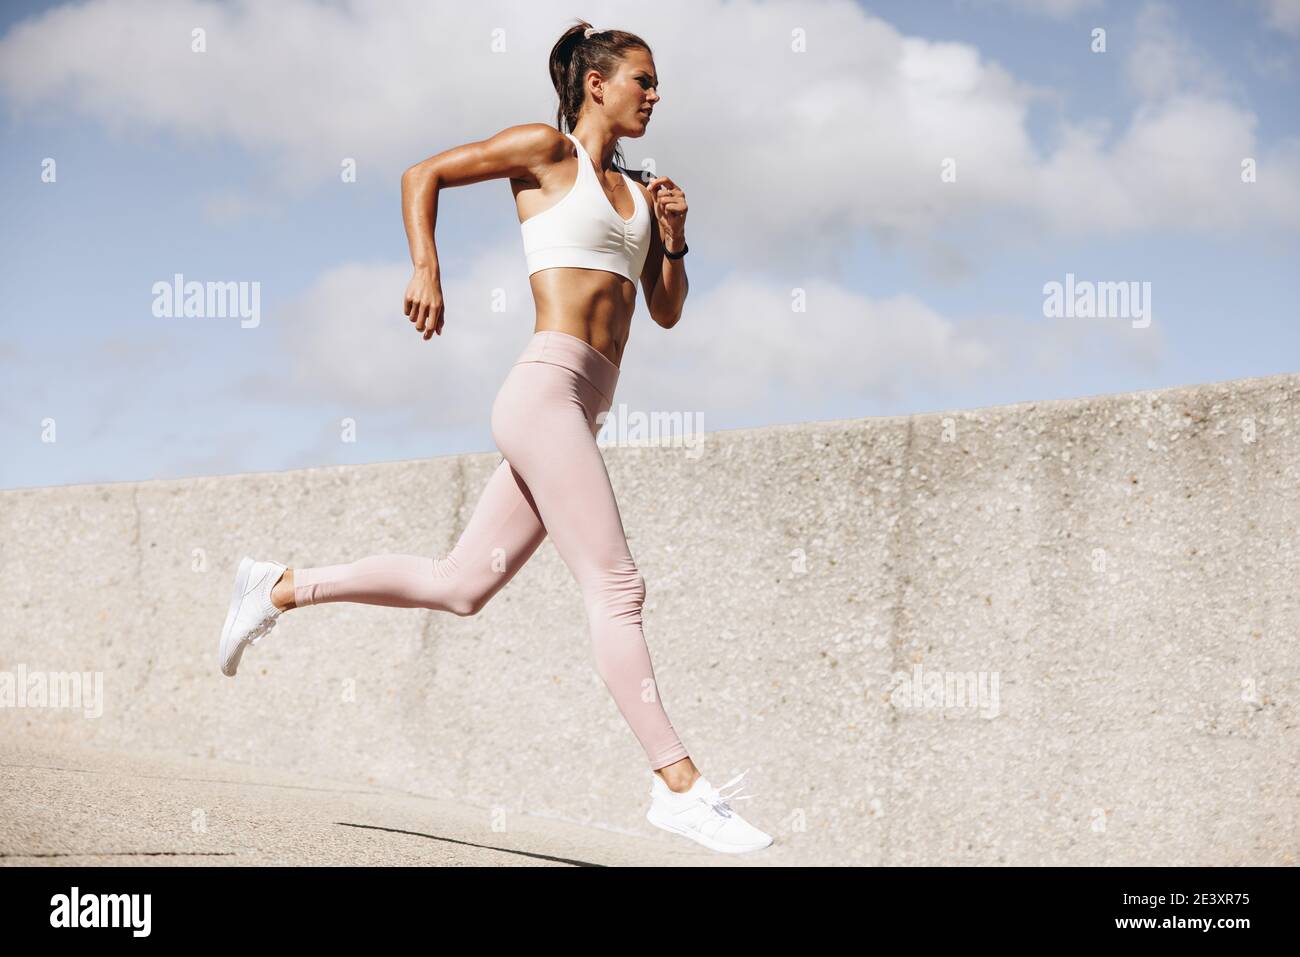 https://c8.alamy.com/comp/2E3XR75/sports-woman-running-outdoors-in-the-morning-female-athlete-in-running-attire-exercising-in-morning-2E3XR75.jpg